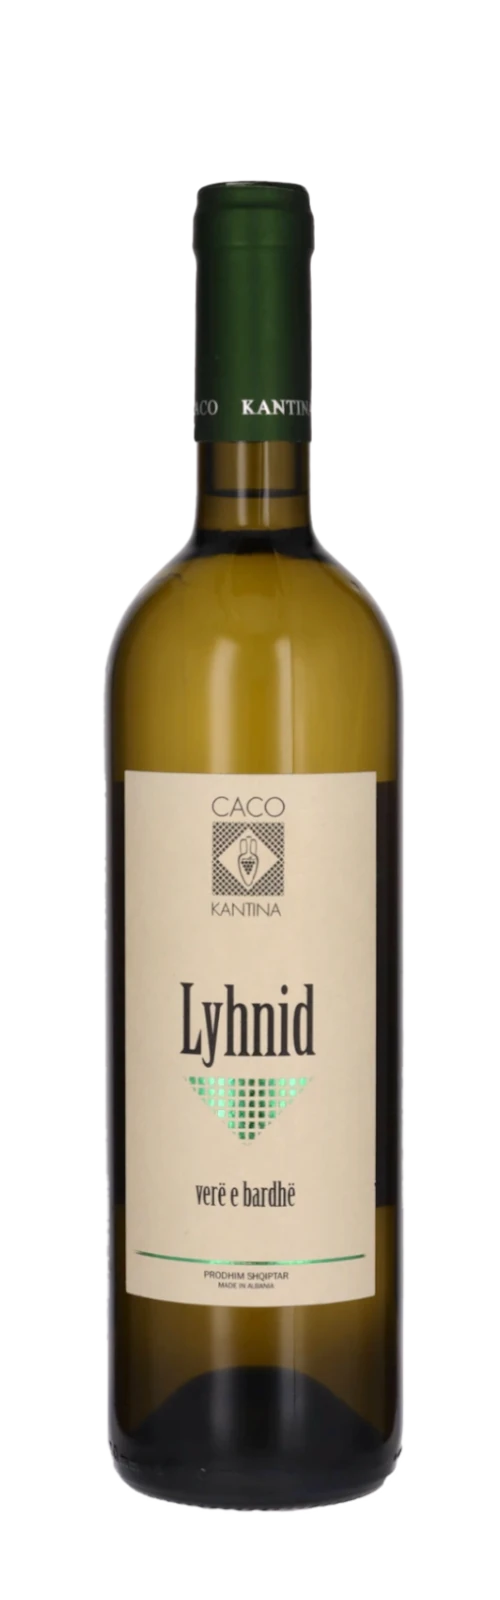 Lyhnid i bardhë 2021 - 12,5% vol. - CACO Winery